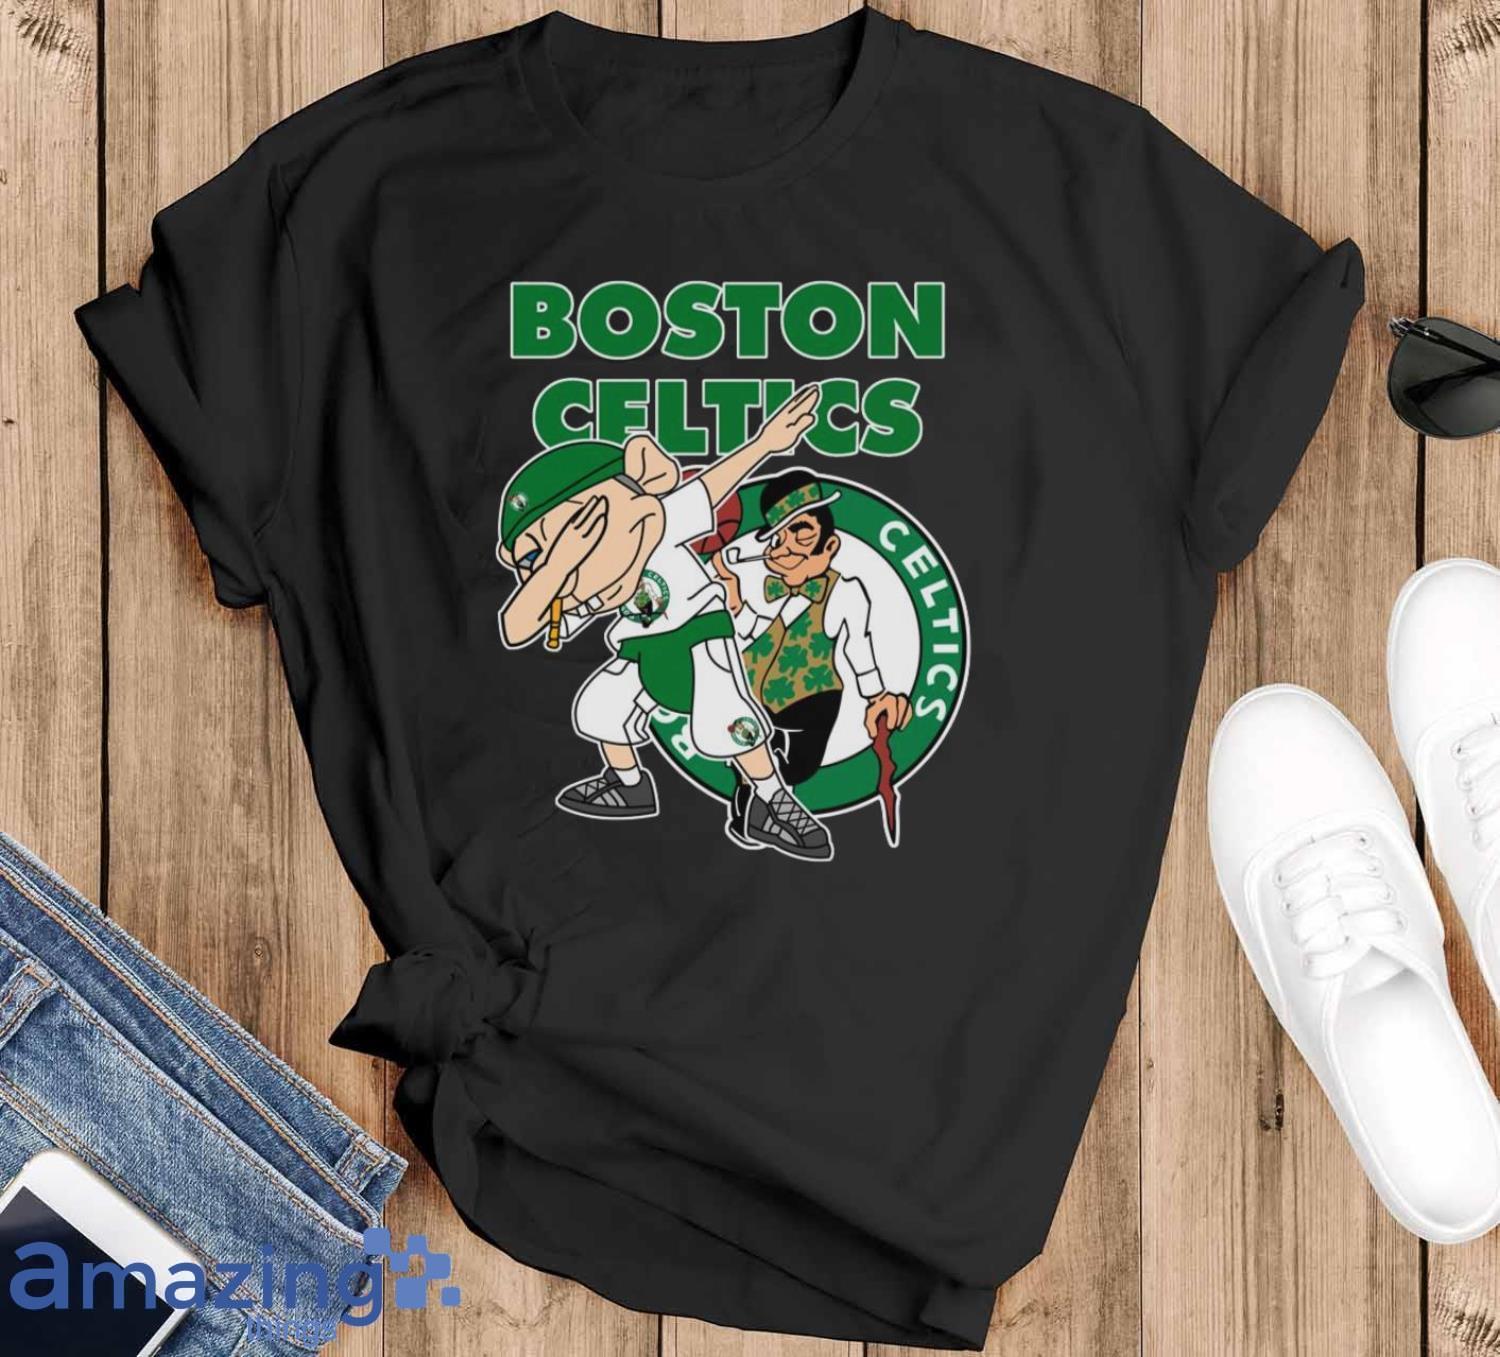 boston celtics shirt women